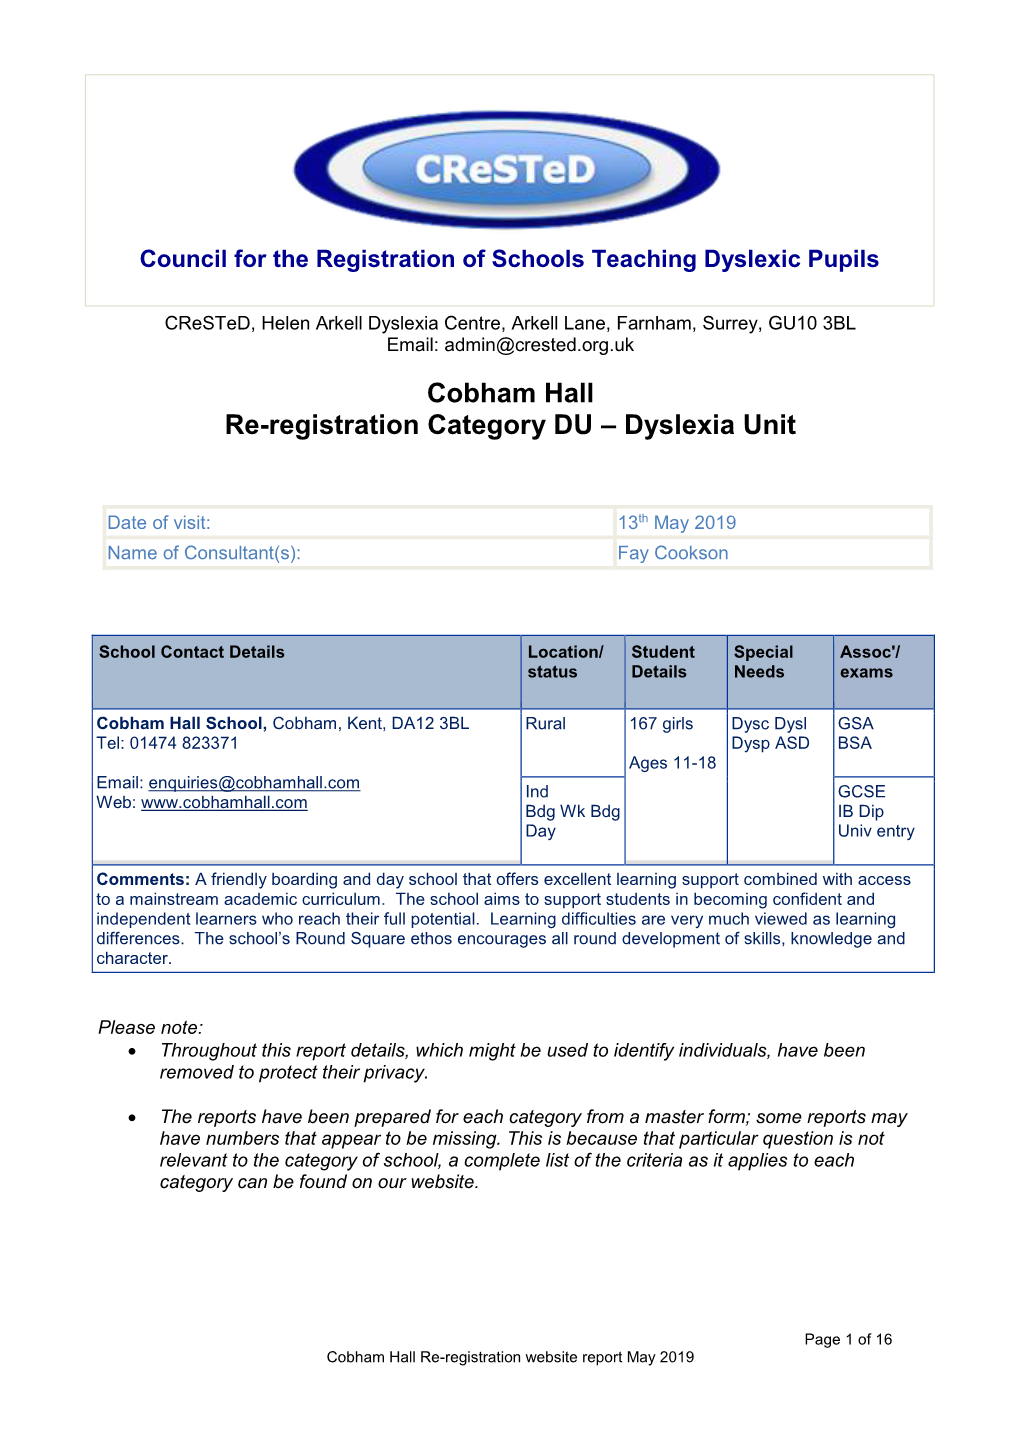 Cobham Hall Re-Registration Category DU – Dyslexia Unit